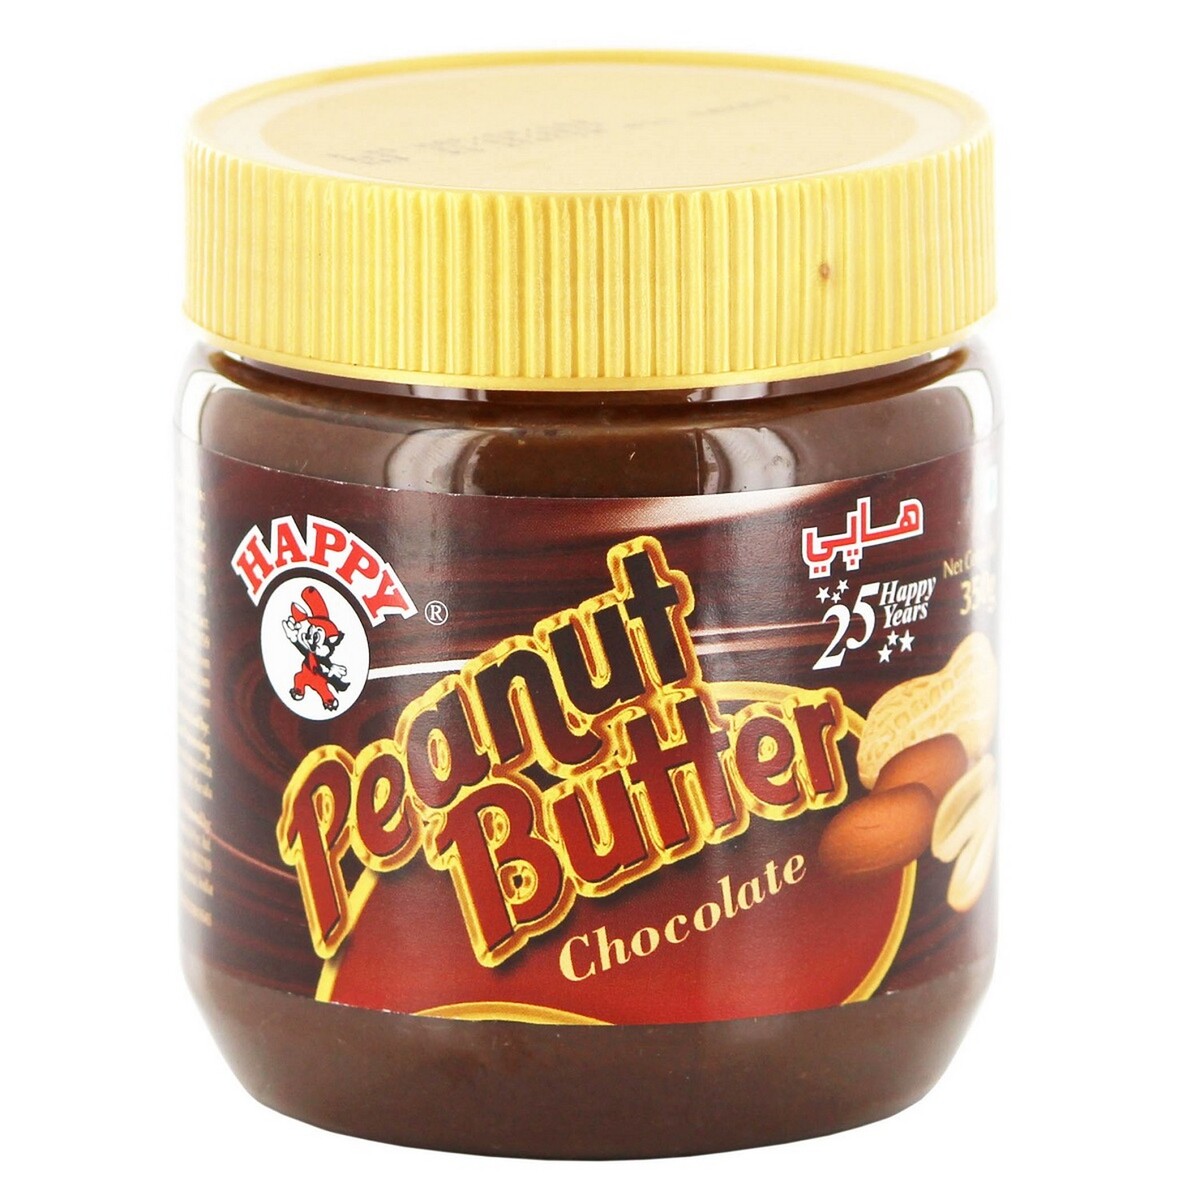 Happy Peanut Butter Chocolate 200g